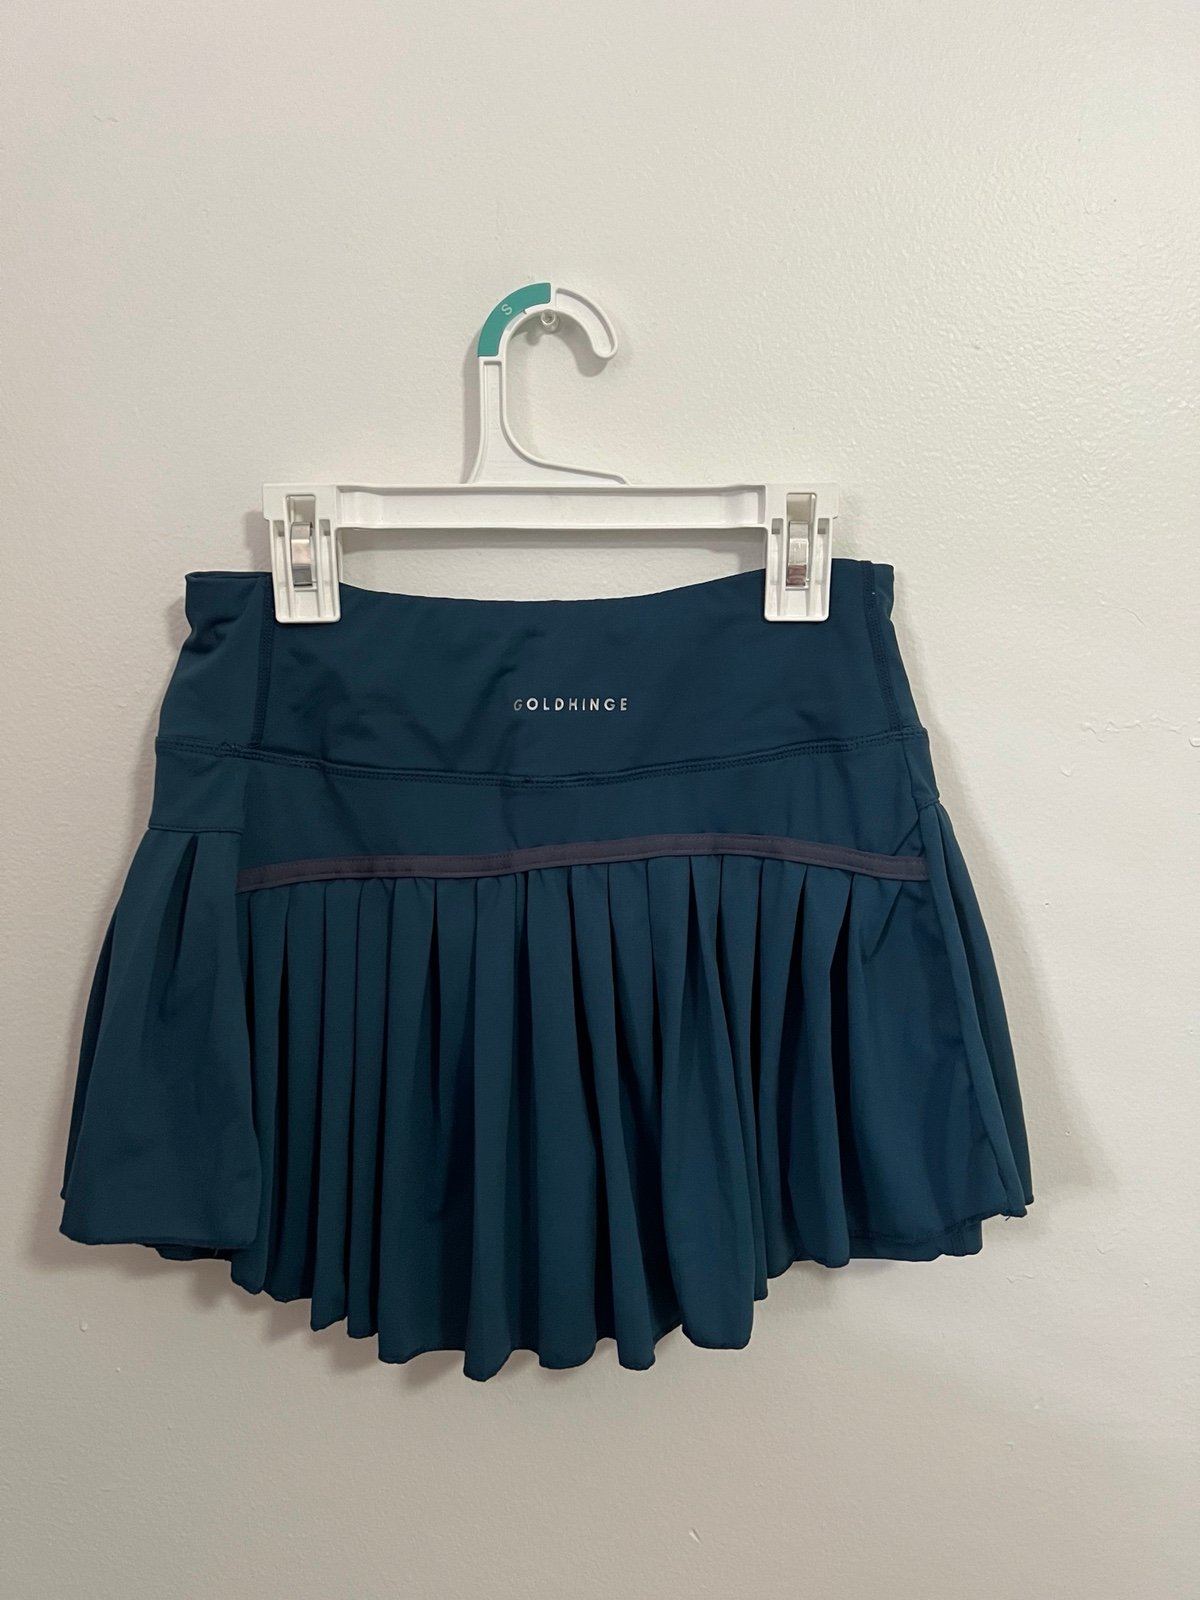 Popular Goldhinge Skirt Pleated Tennis Golf Activewear 